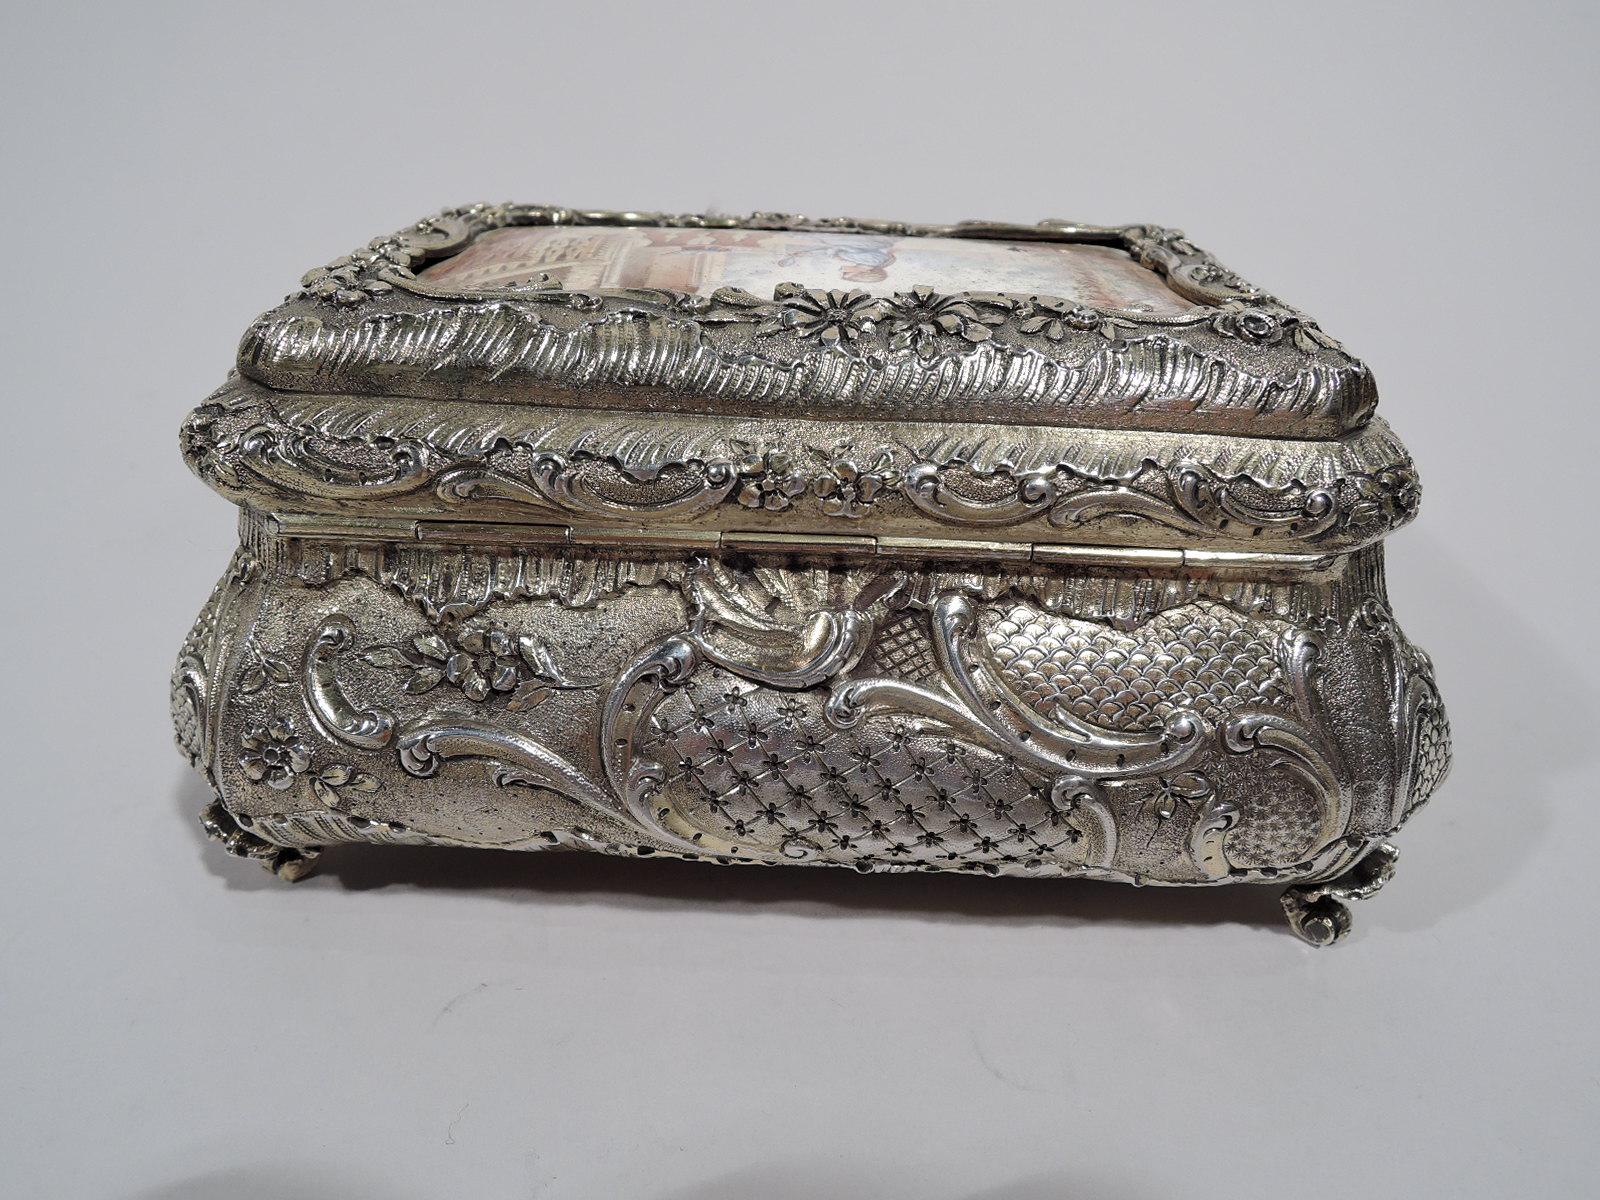 19th Century Antique French Renaissance Revival Silver Gilt and Enamel Casket Box